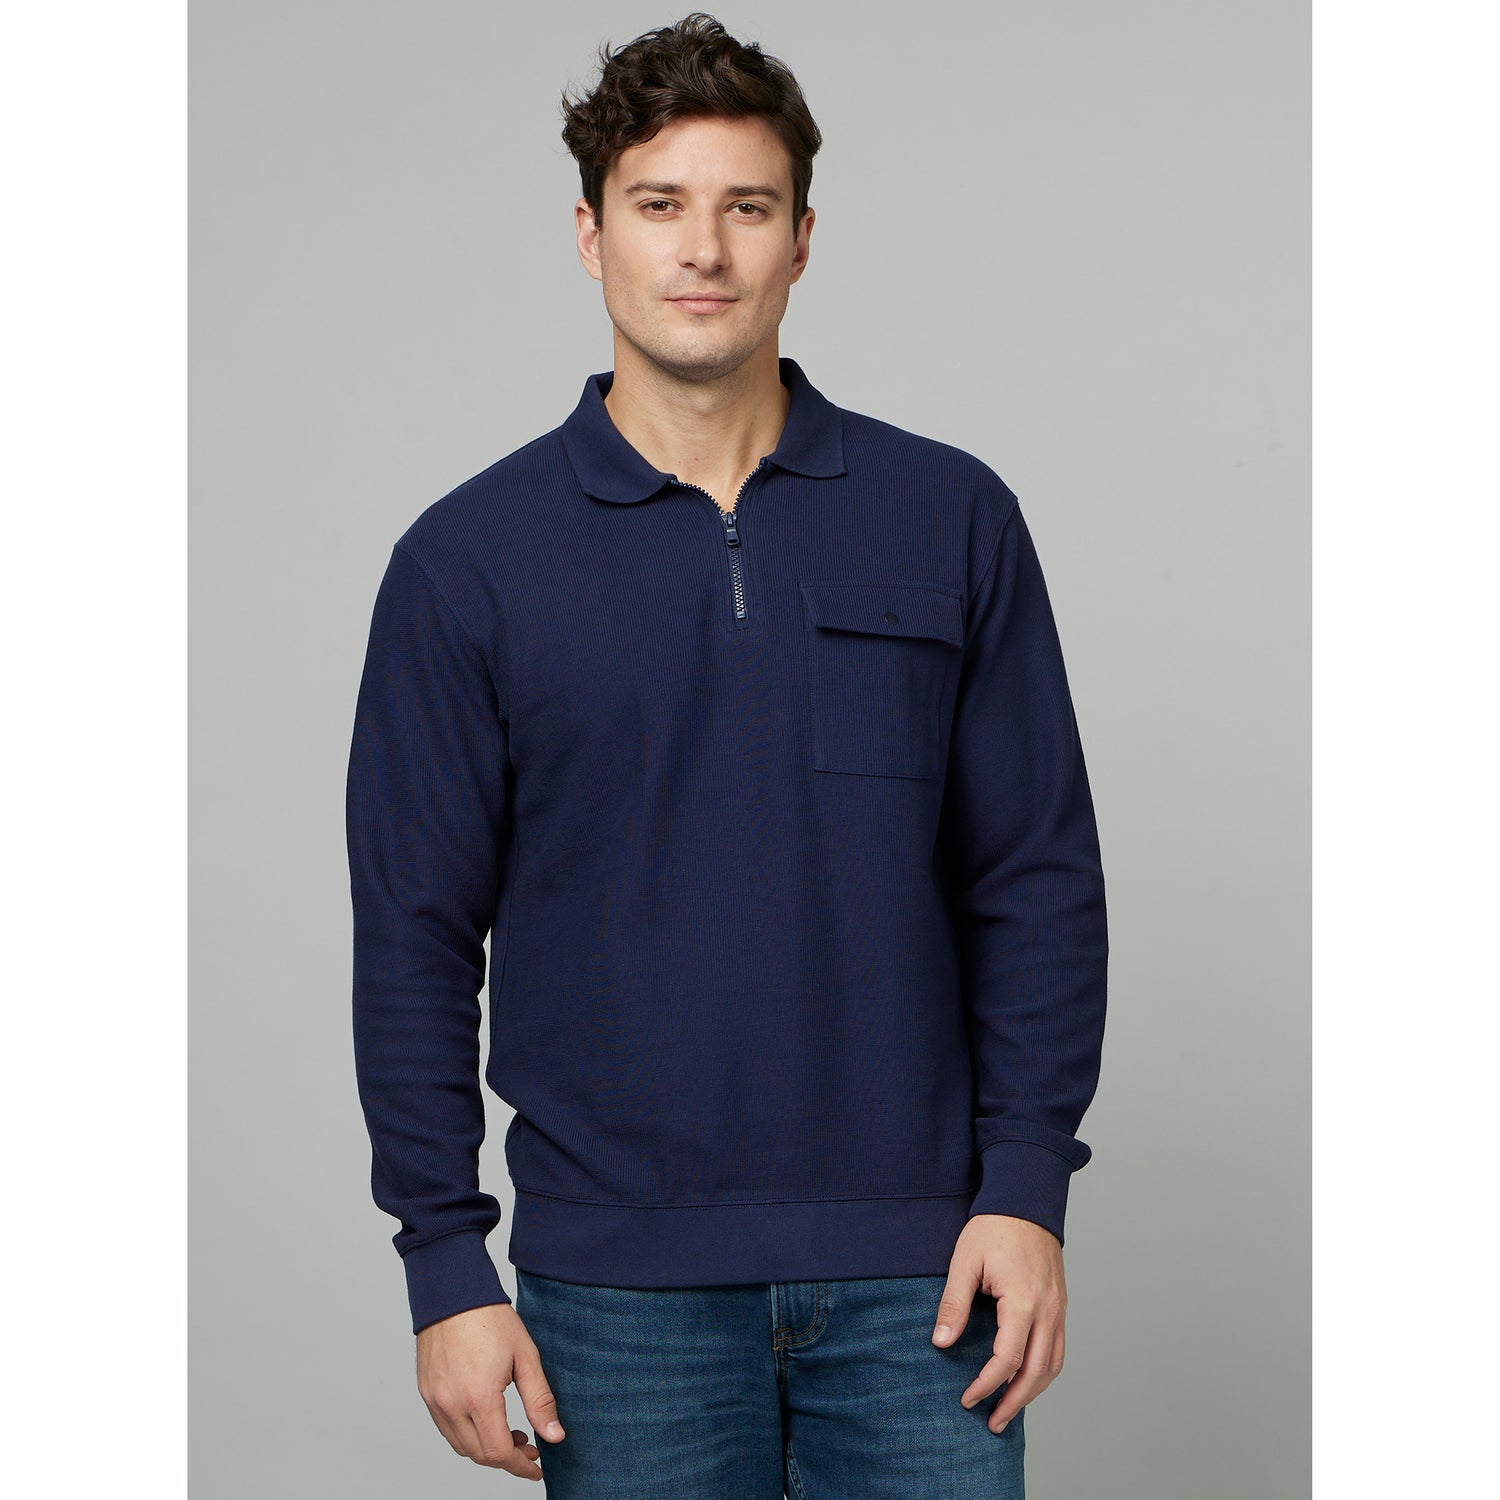 Navy Cotton Pullover Sweatshirt (FEHALFY)